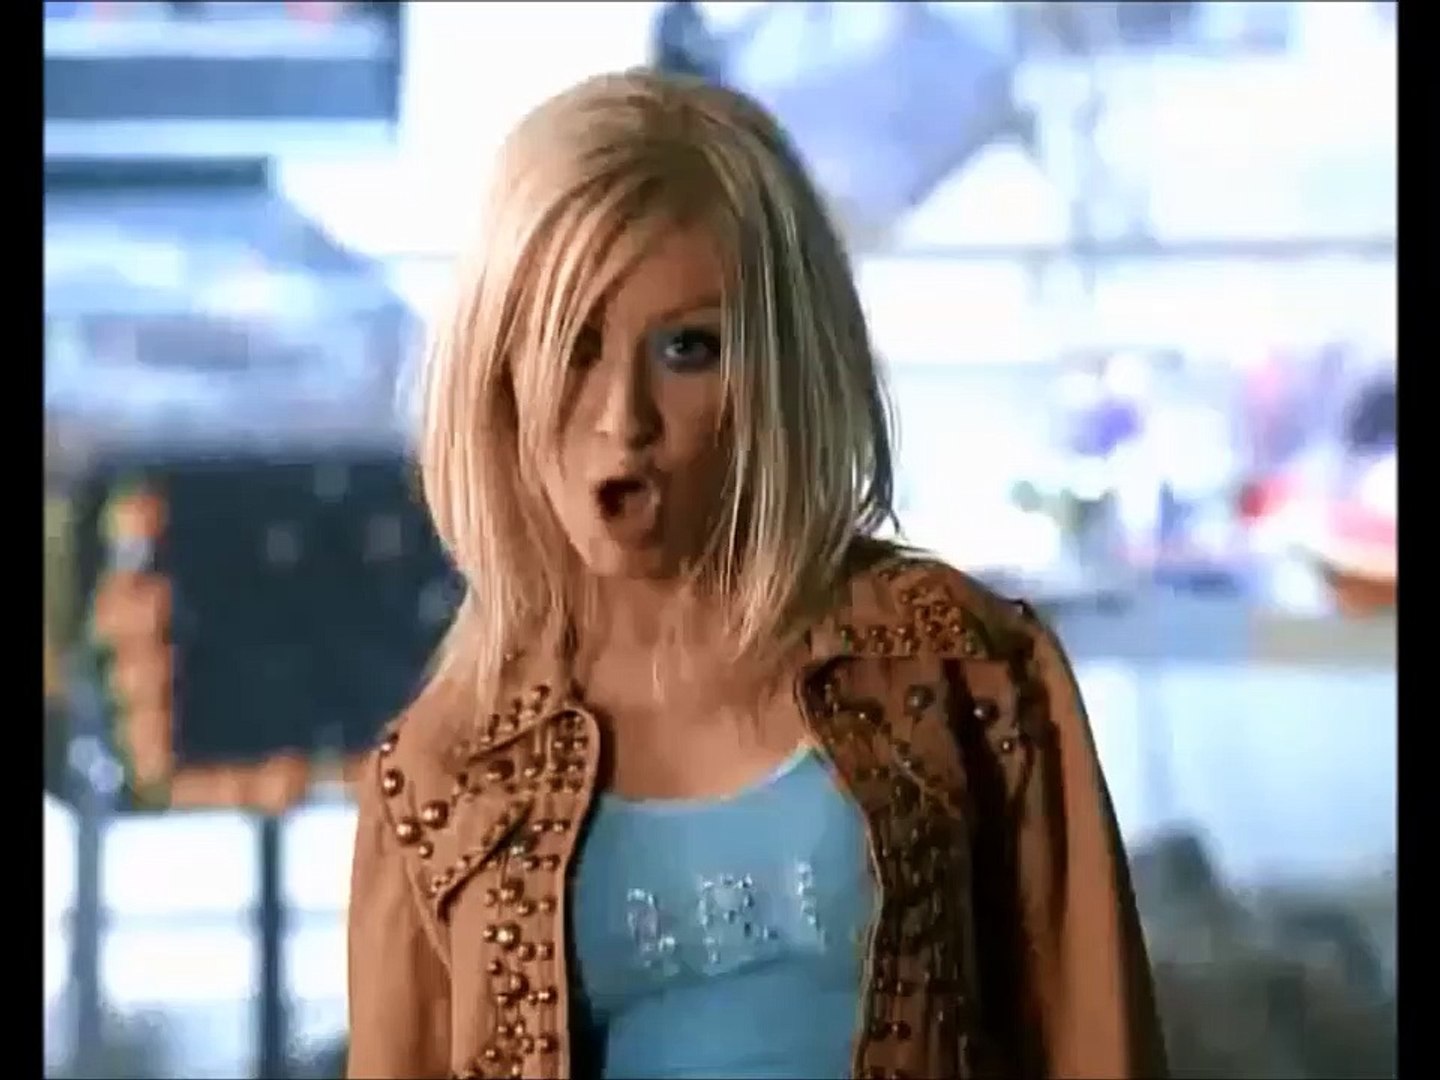 Britney Spears & Christina Aguilera Karaoke DVD